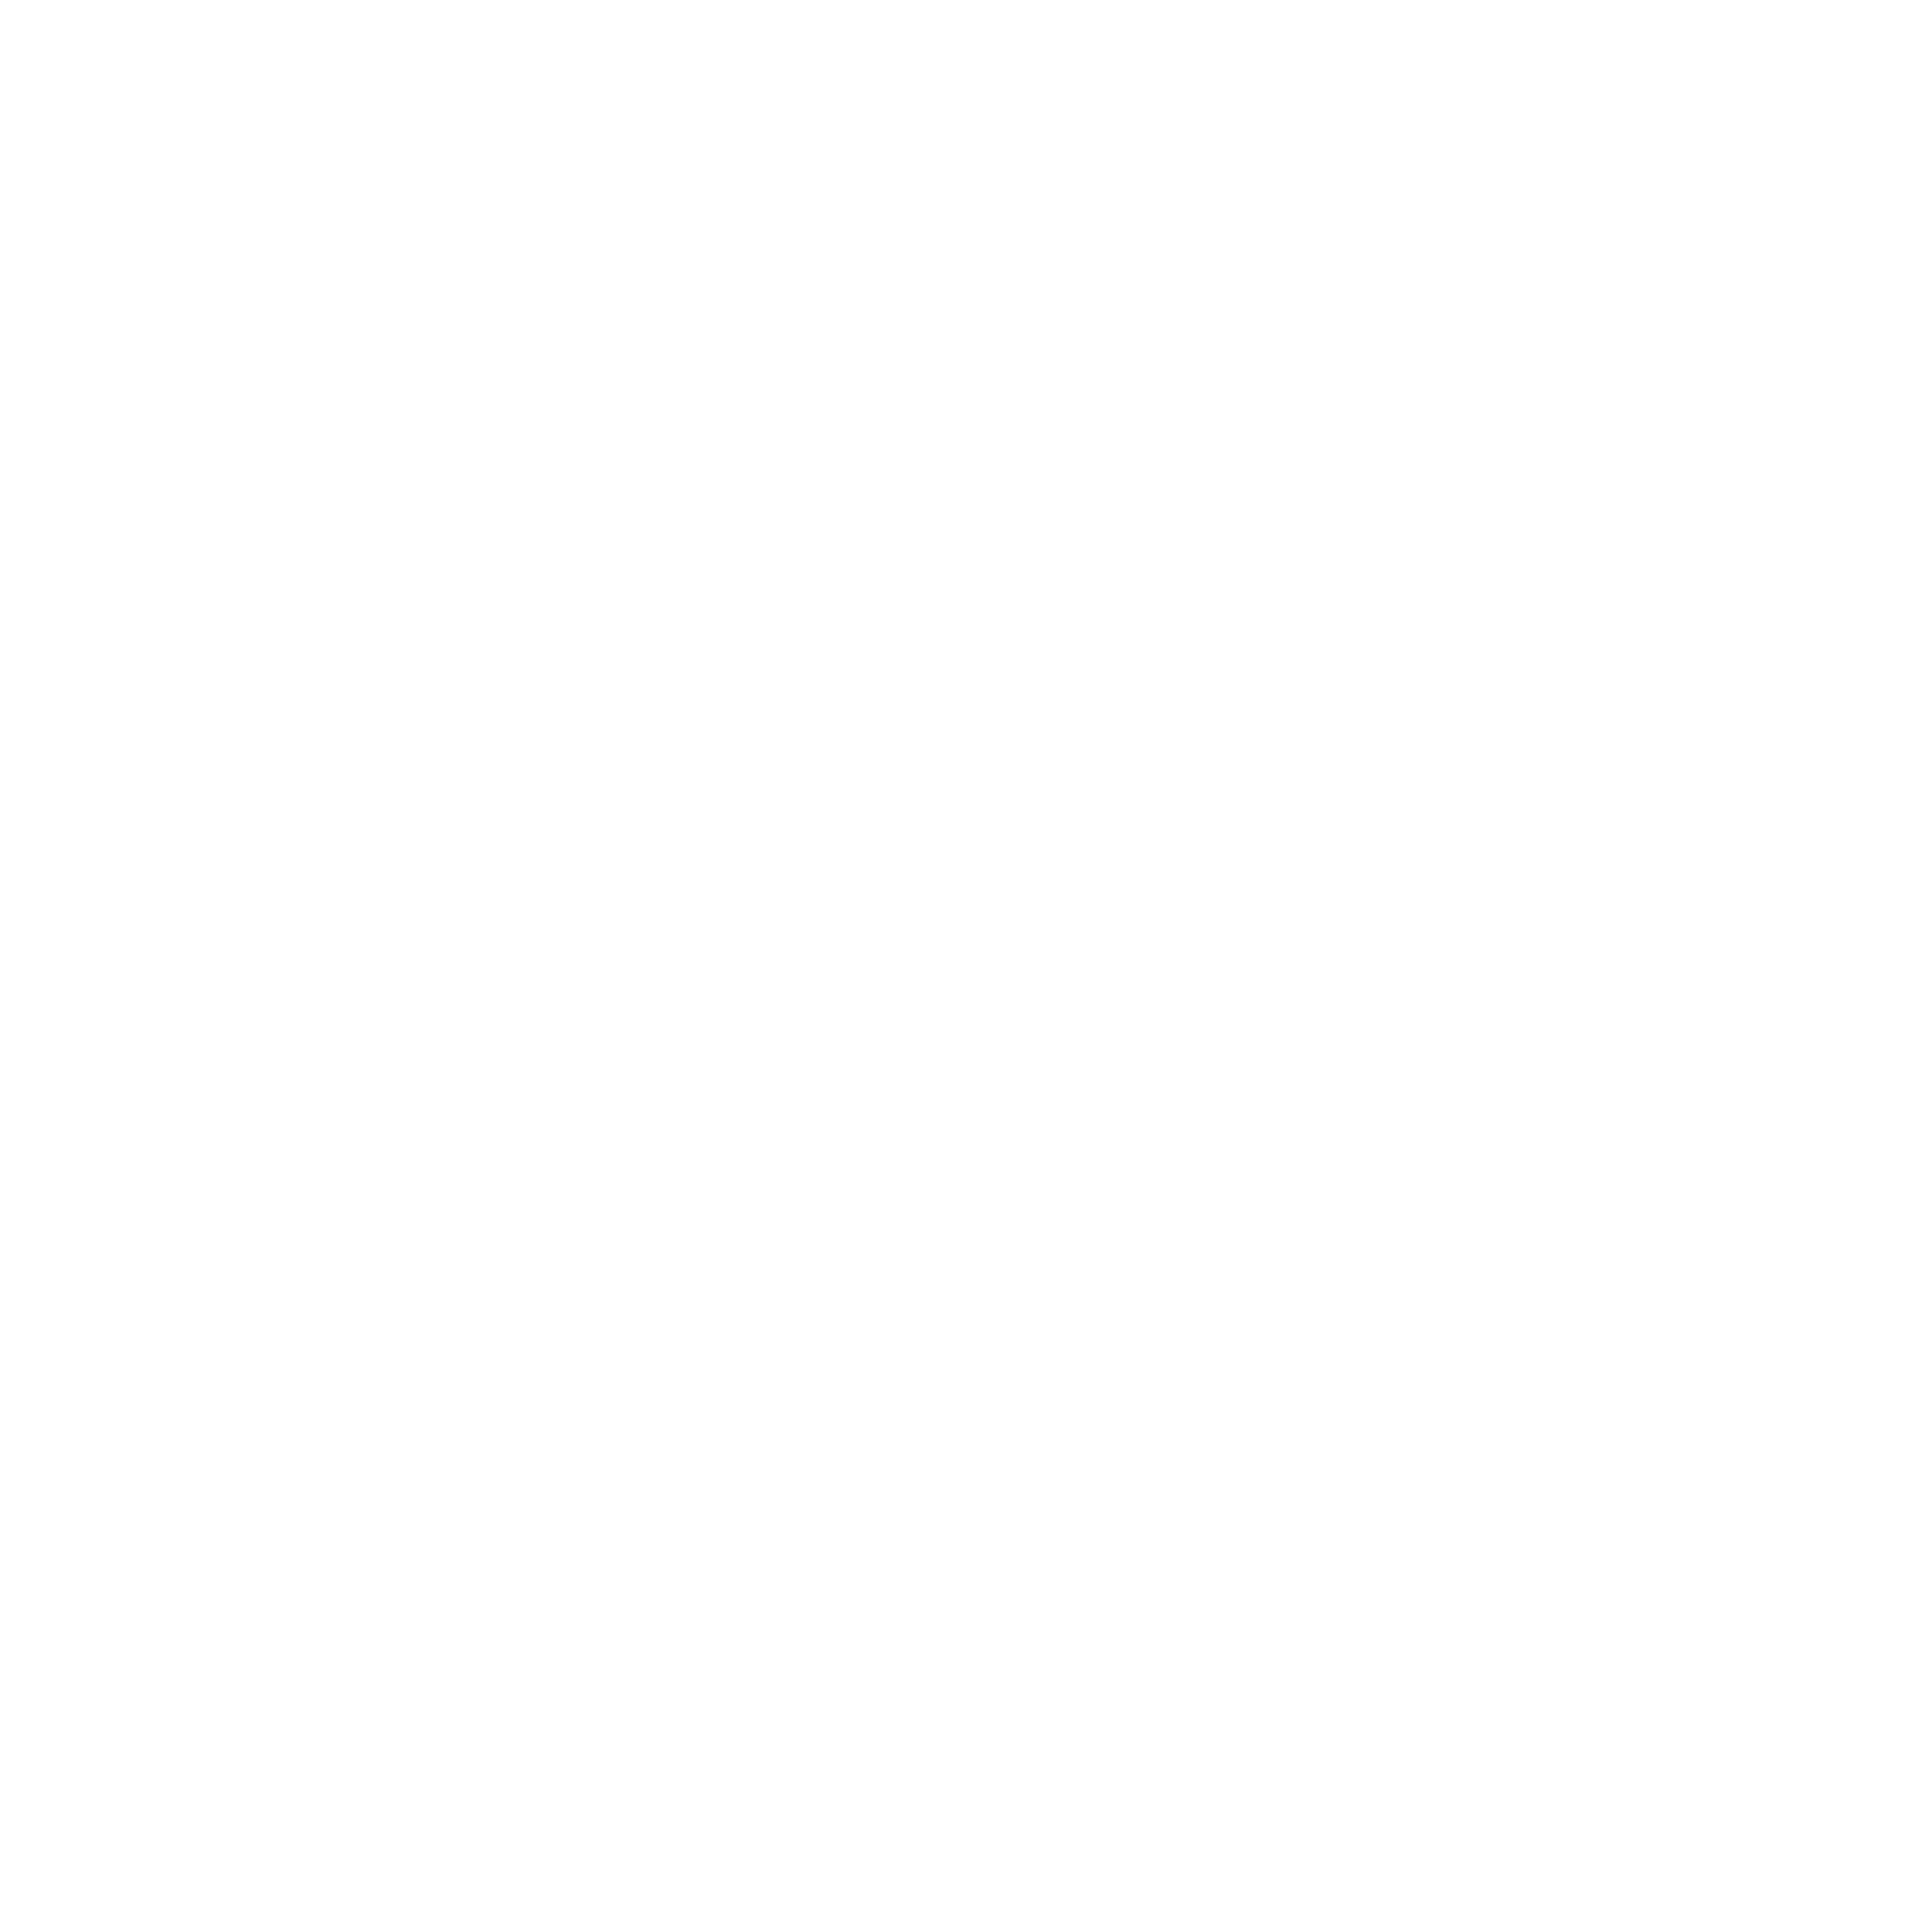 Thailand Attitude